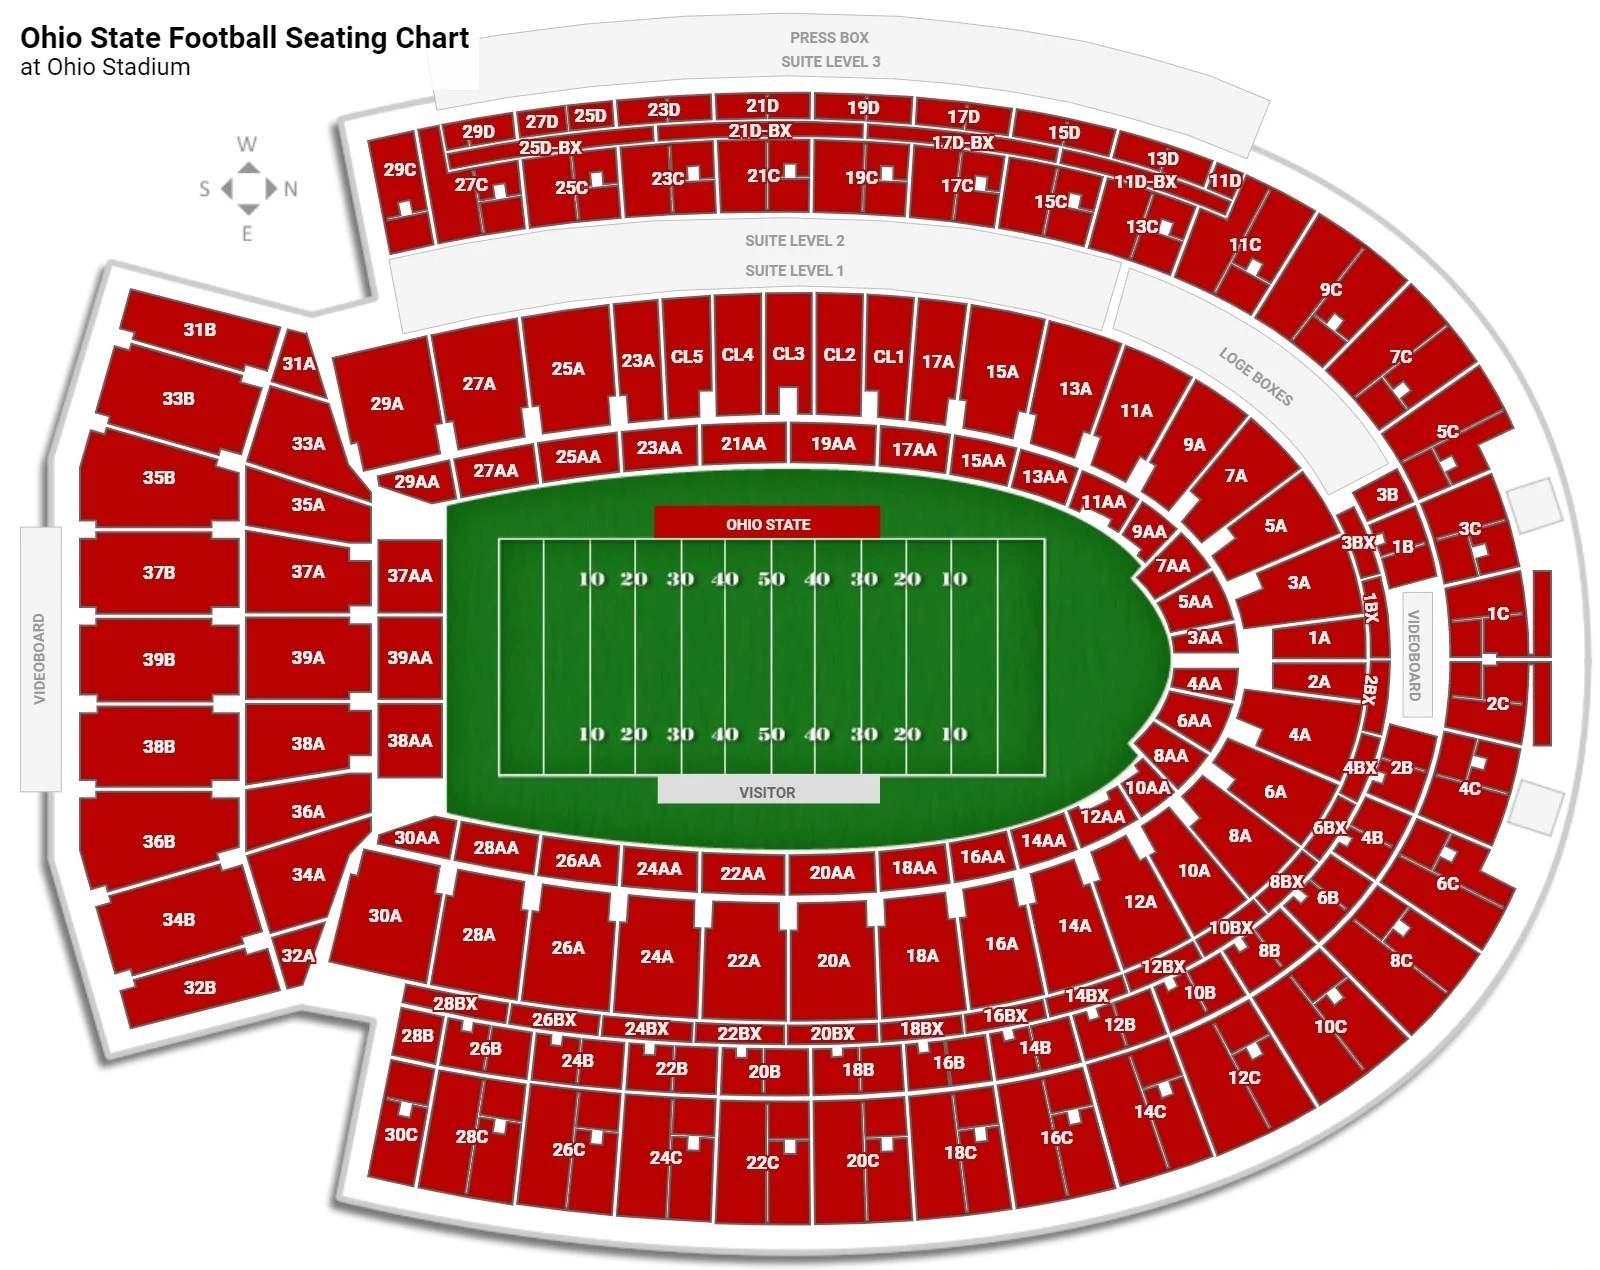 Ohio State Stadium Seating Chart for Football